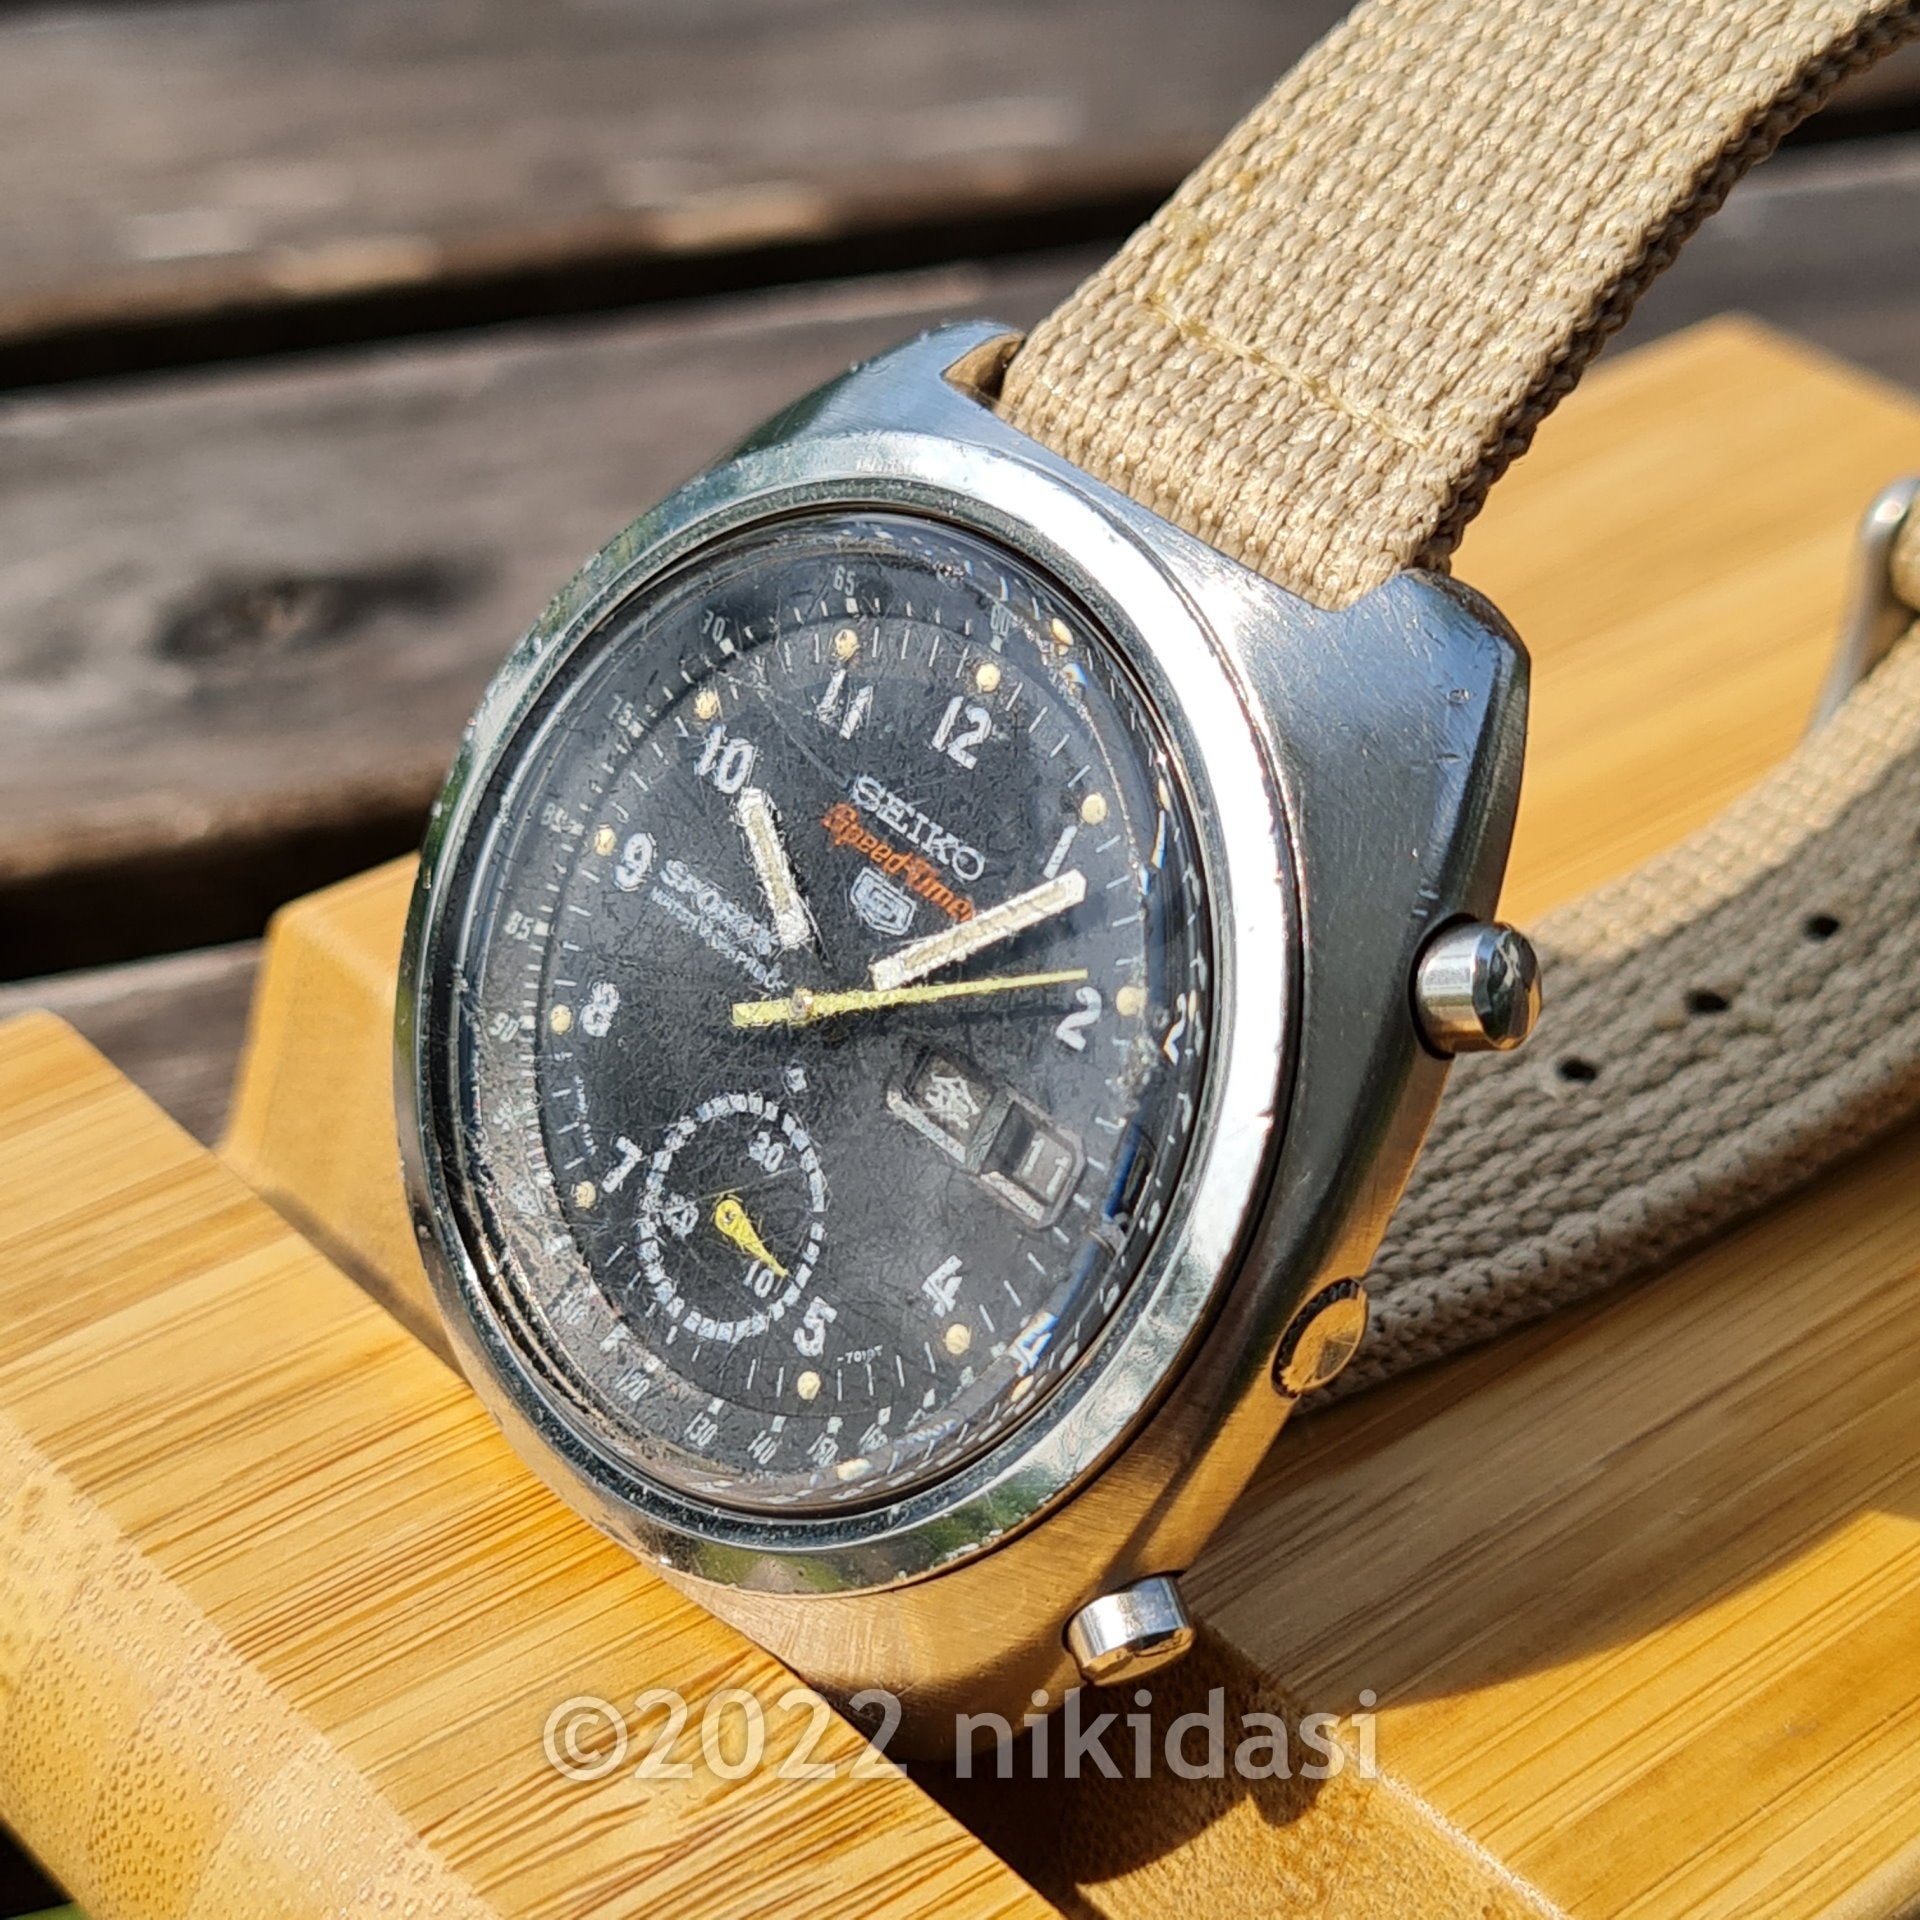 Seiko 6139-7011 Military Speed-Timer (November 1970) | The Watch Site